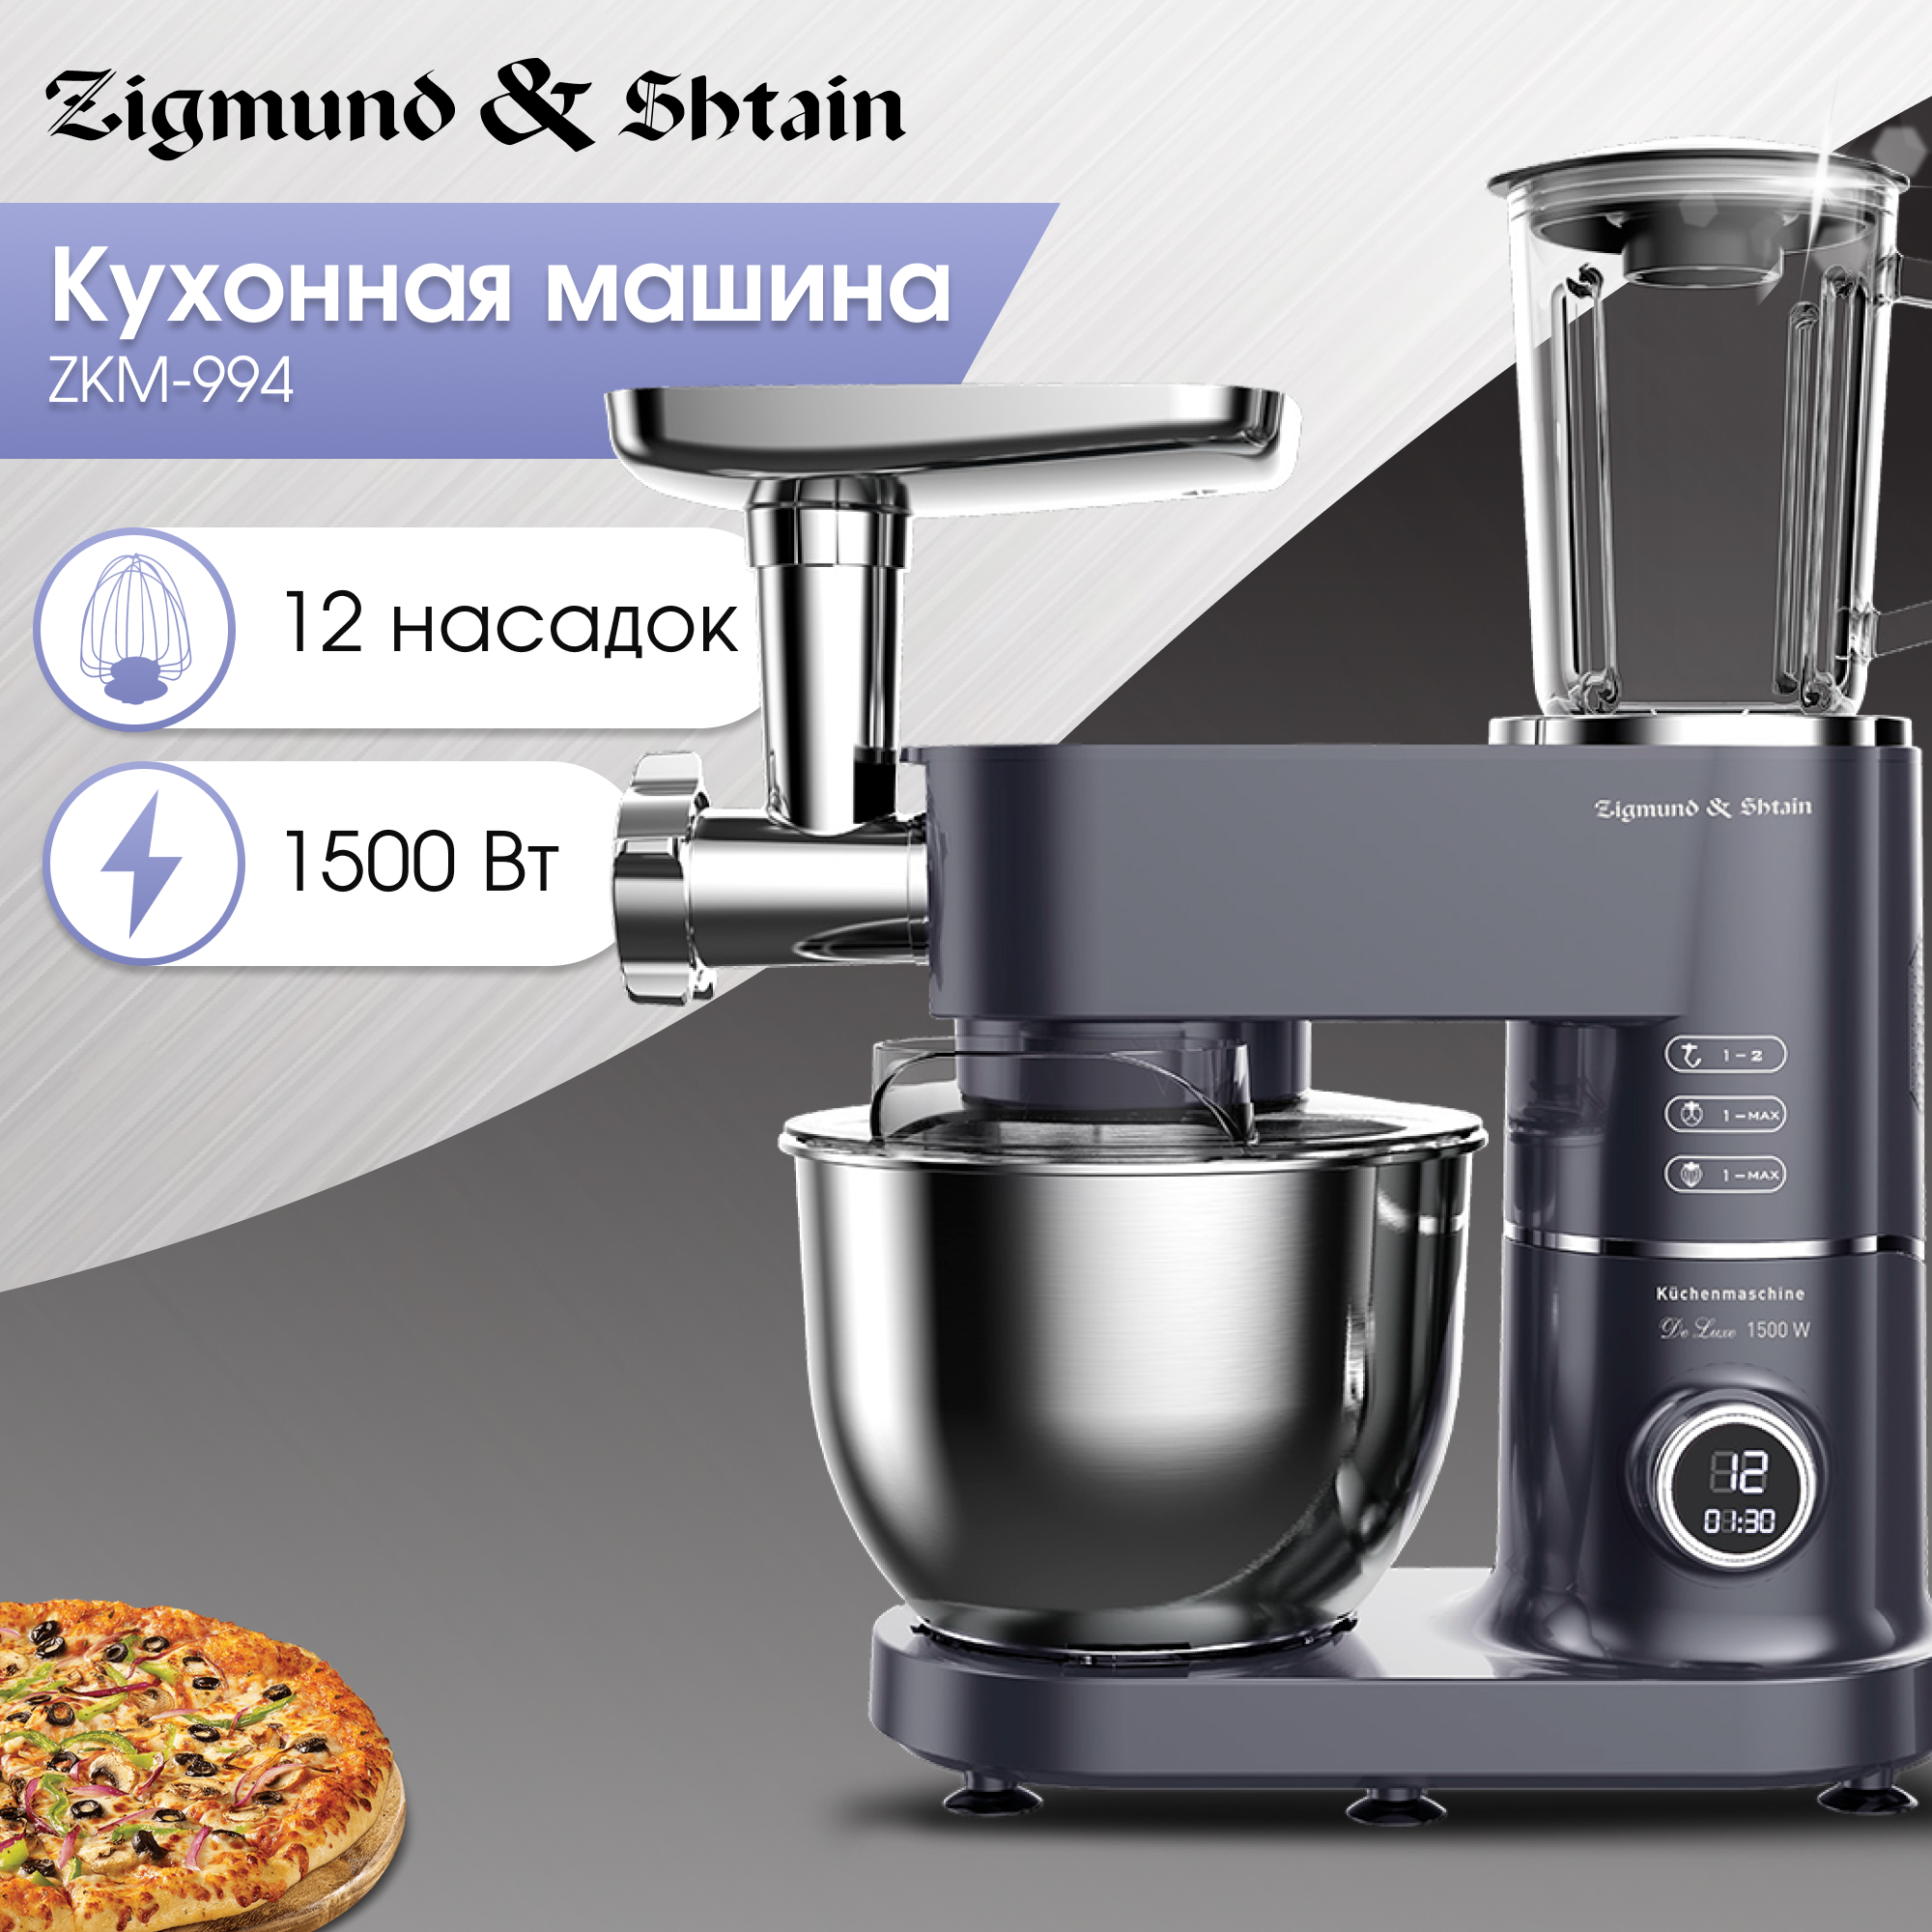 Кухонный комбайн Zigmund & Shtain ZKM-994 серый, черный полезные машины